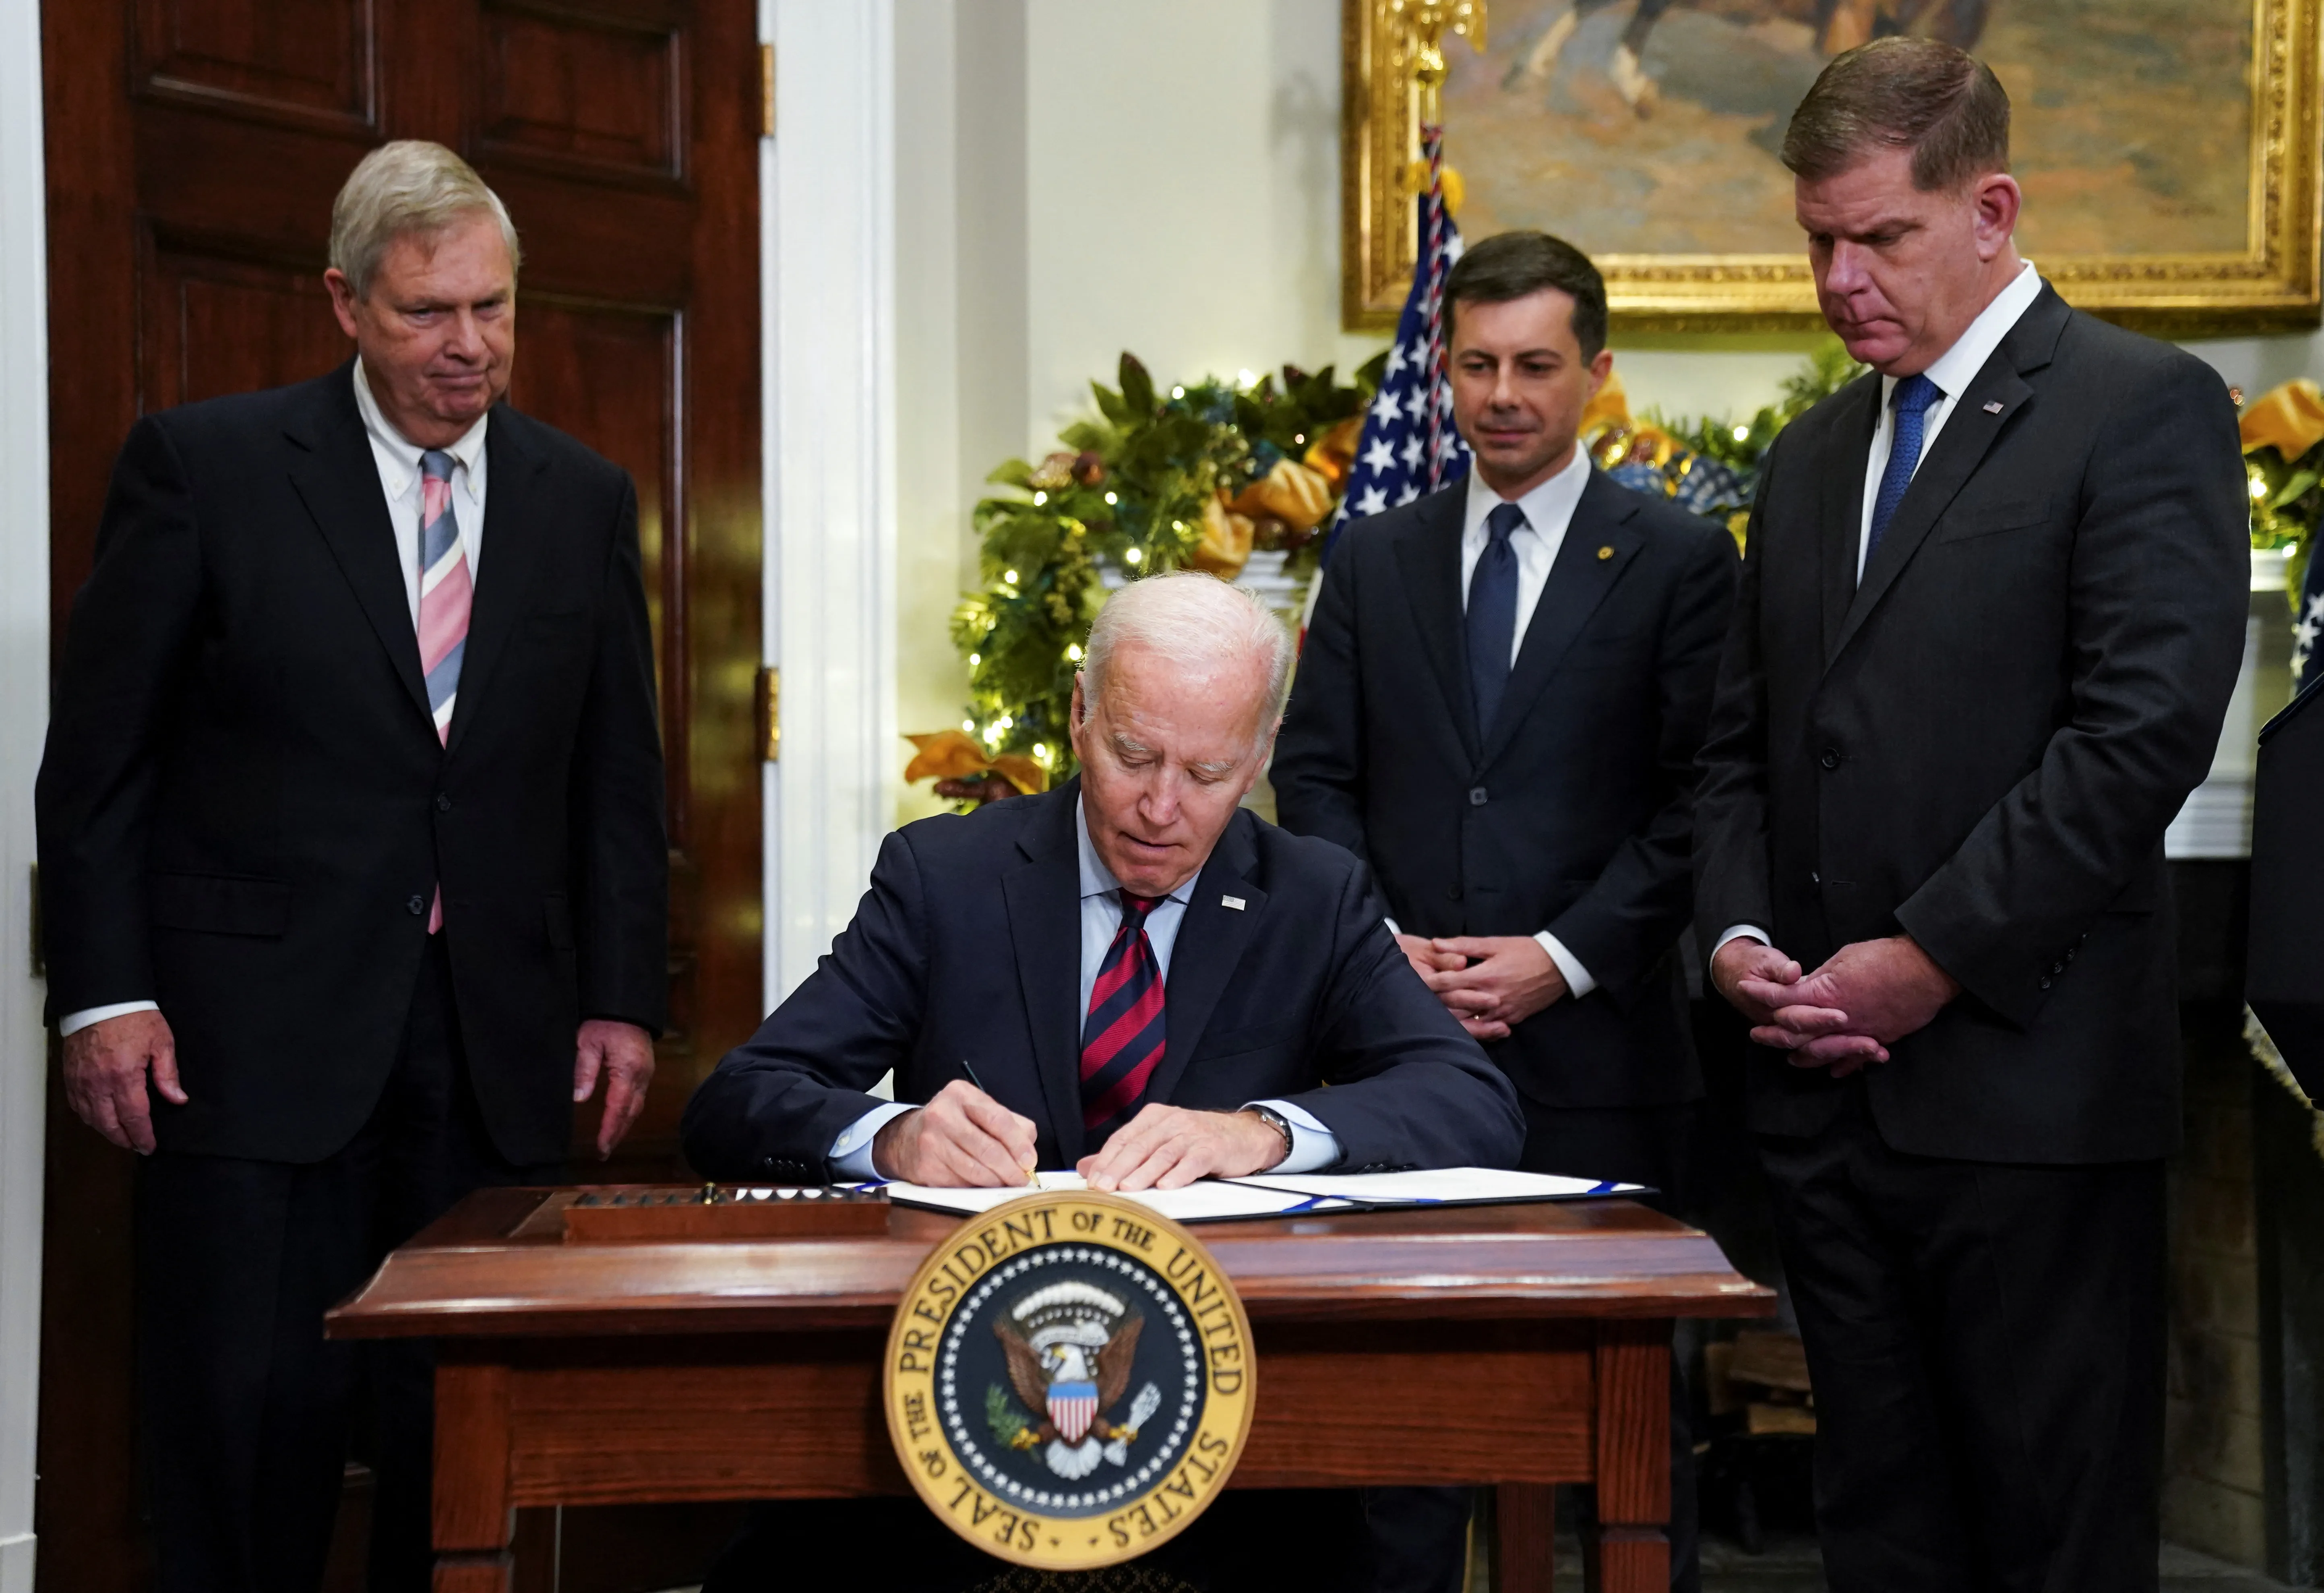 Tracking regulatory changes in the Biden era